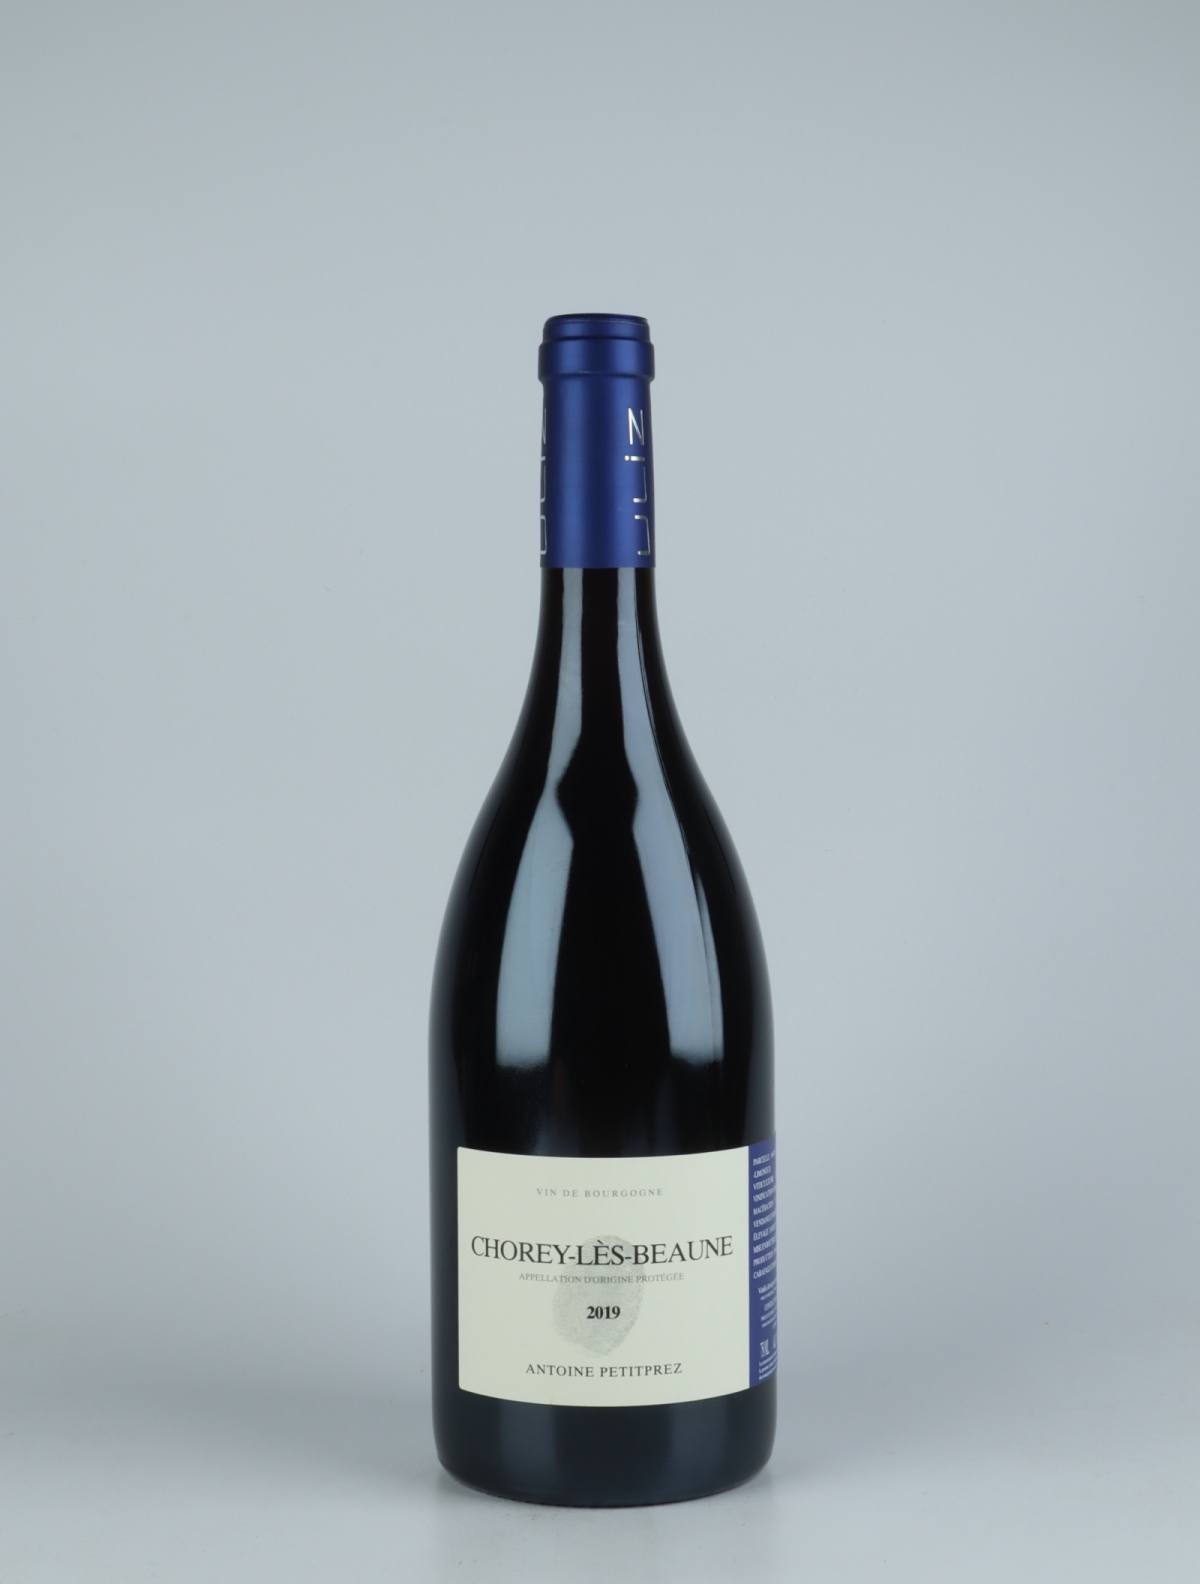 En flaske 2019 Chorey les Beaune Rødvin fra Antoine Petitprez, Bourgogne i Frankrig